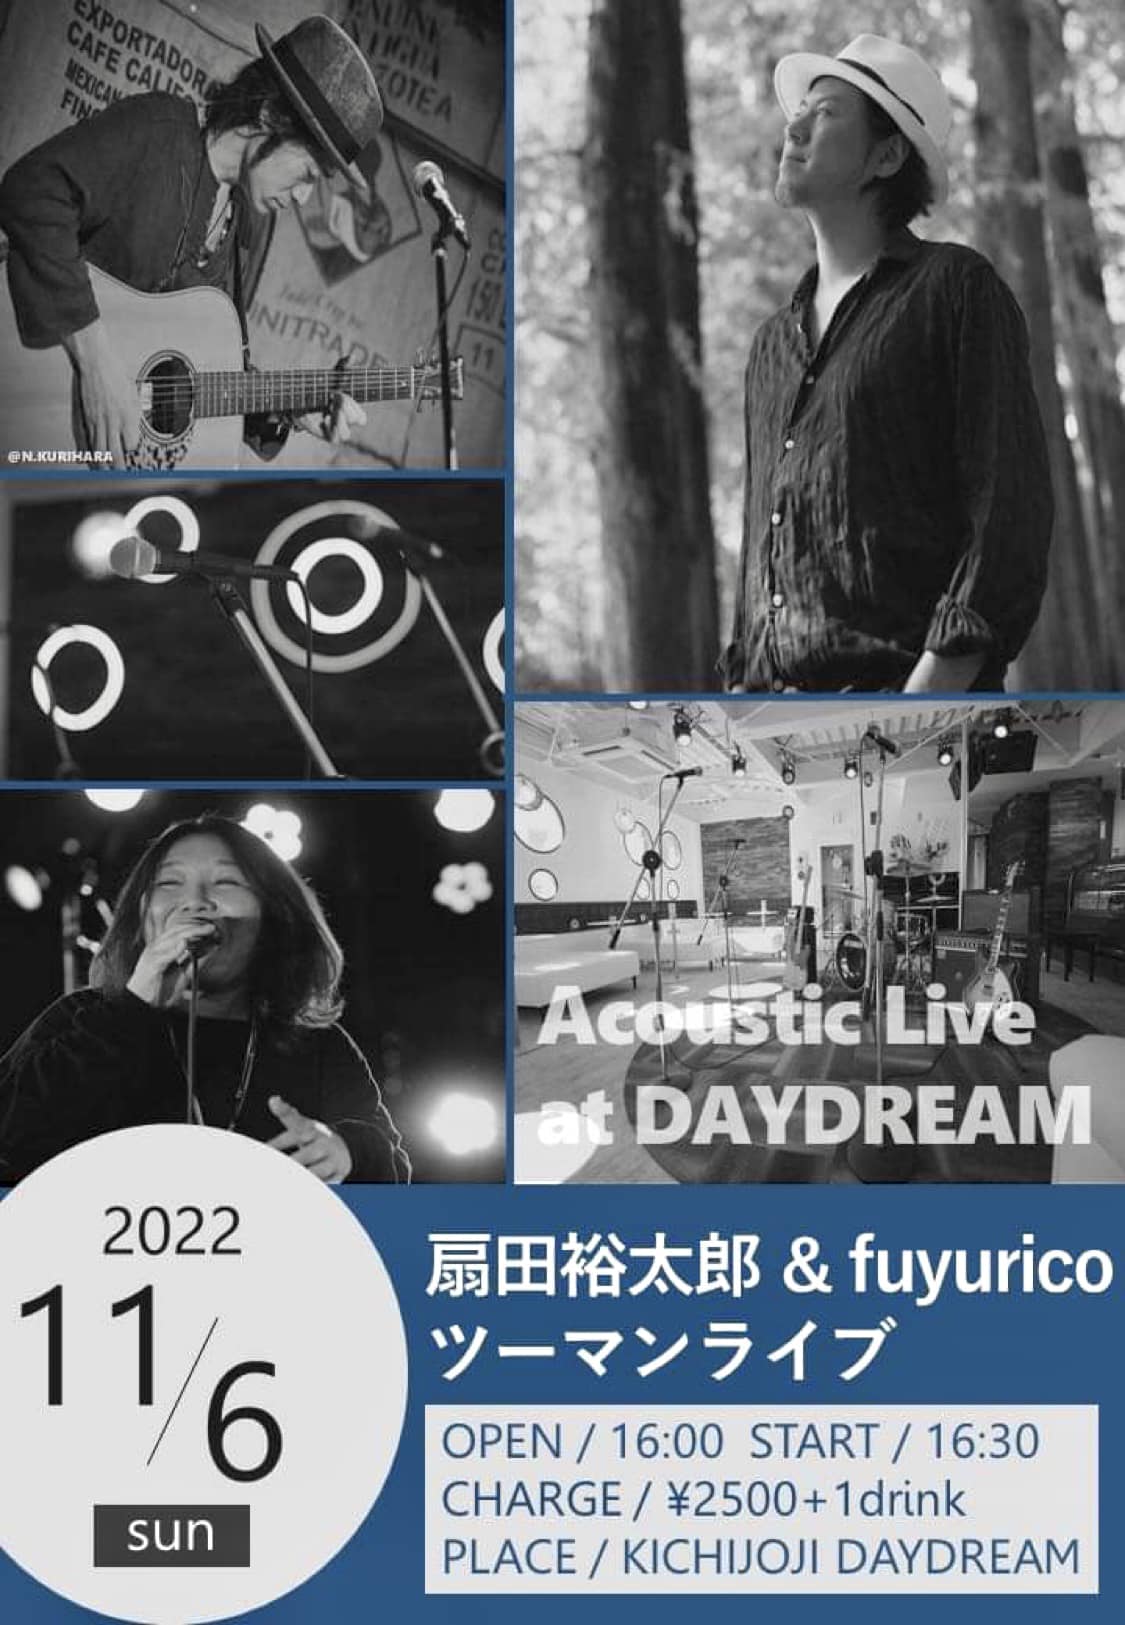 11/6(sun)  Yutaro Ogida & fuyurico【吉祥寺 DAYDREAMからLIVE配信】